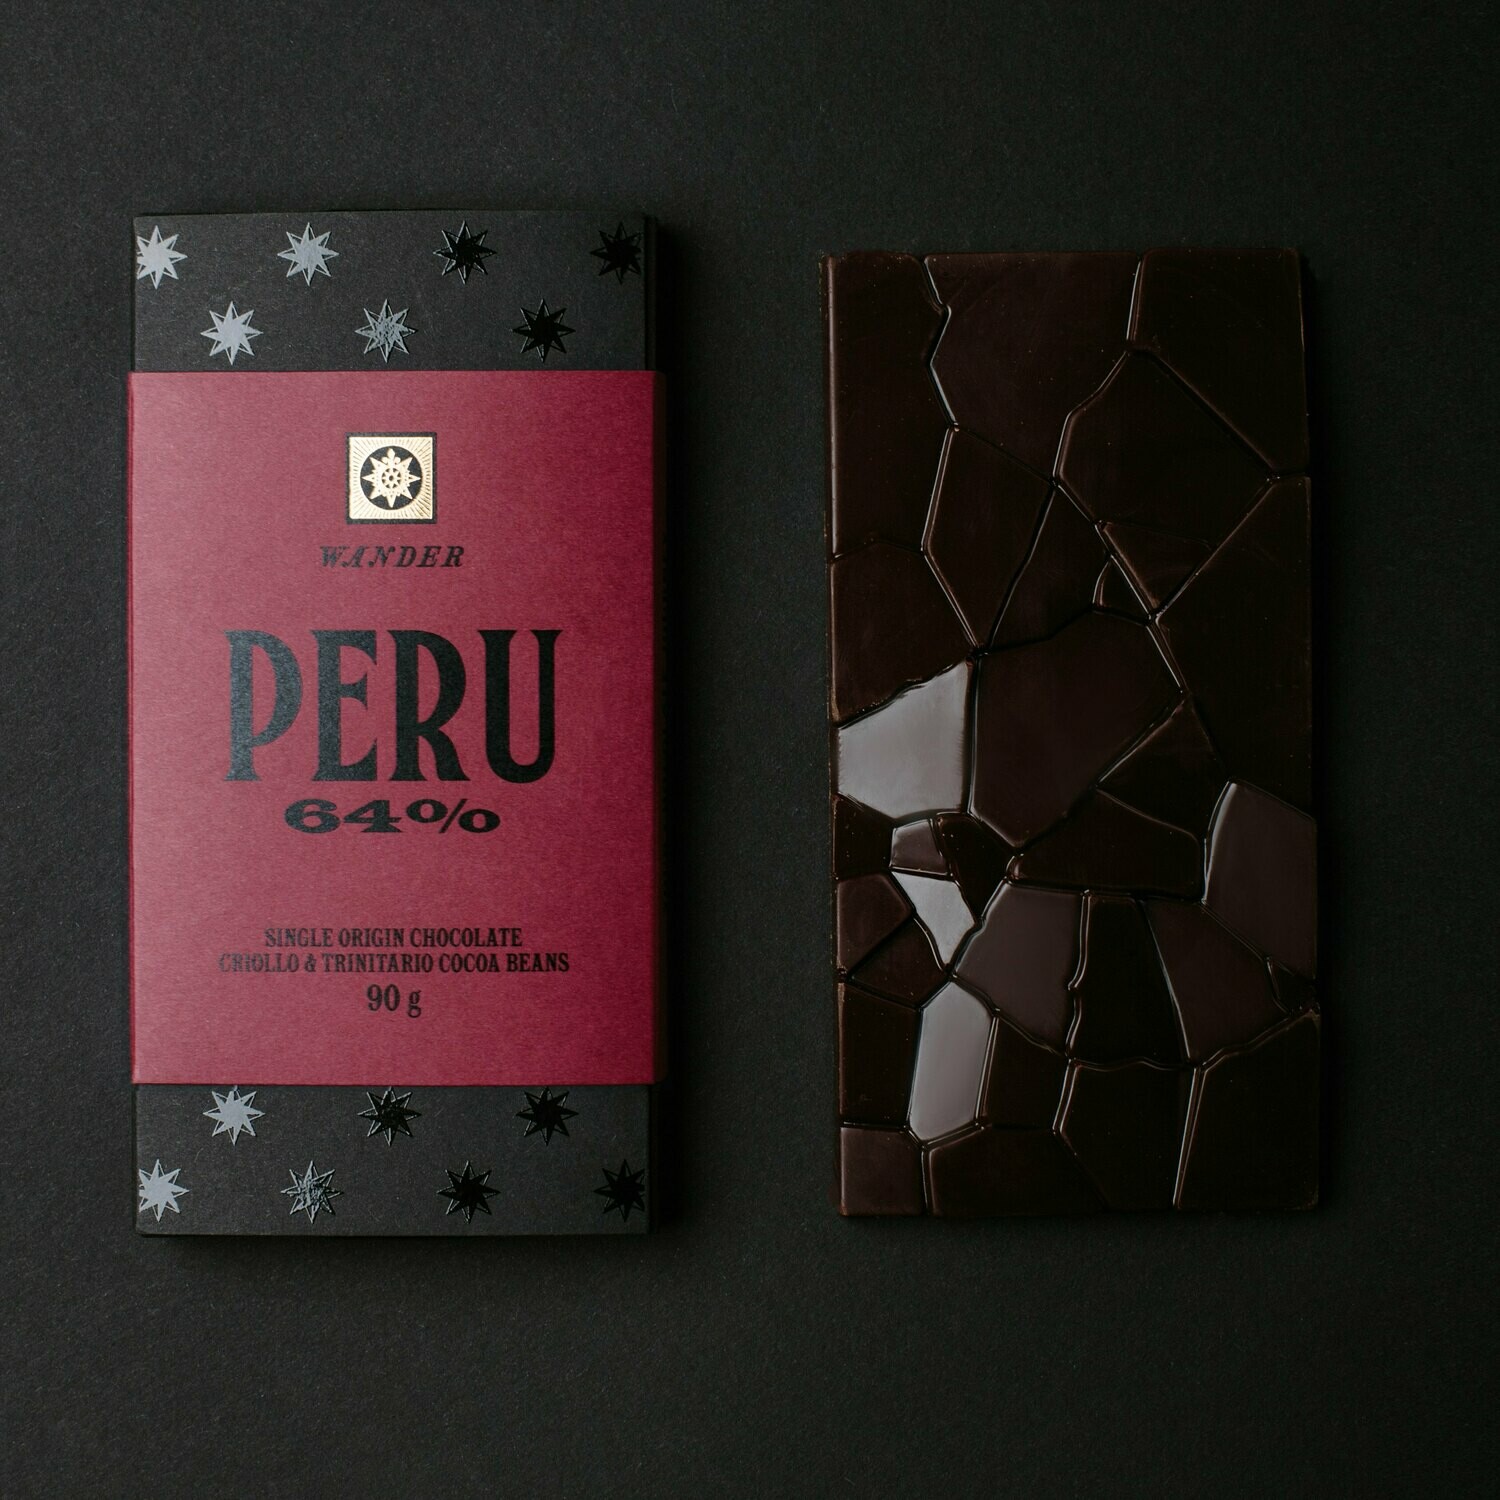 ​Шоколад чорний PERU 64 % Wander ™